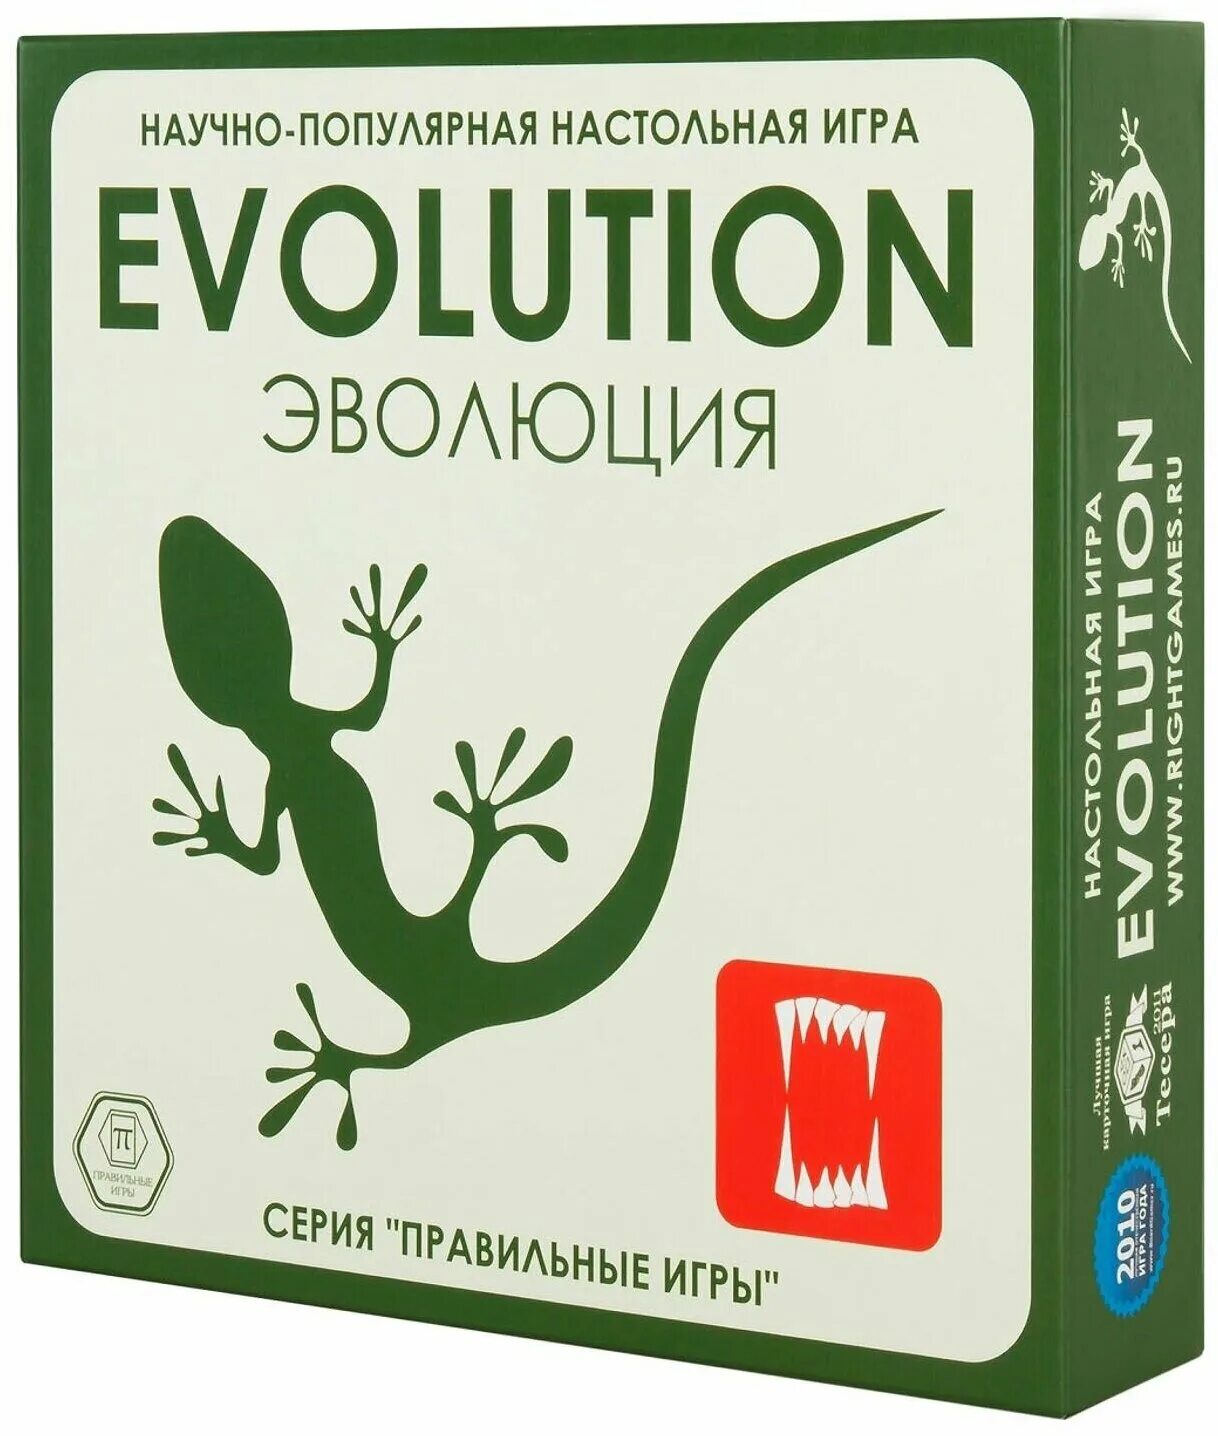 Эволюция настольная купить. Игра Эволюция. Эволюция настолка. Evolution настольная игра. Эволюция настольная игра для взрослых.